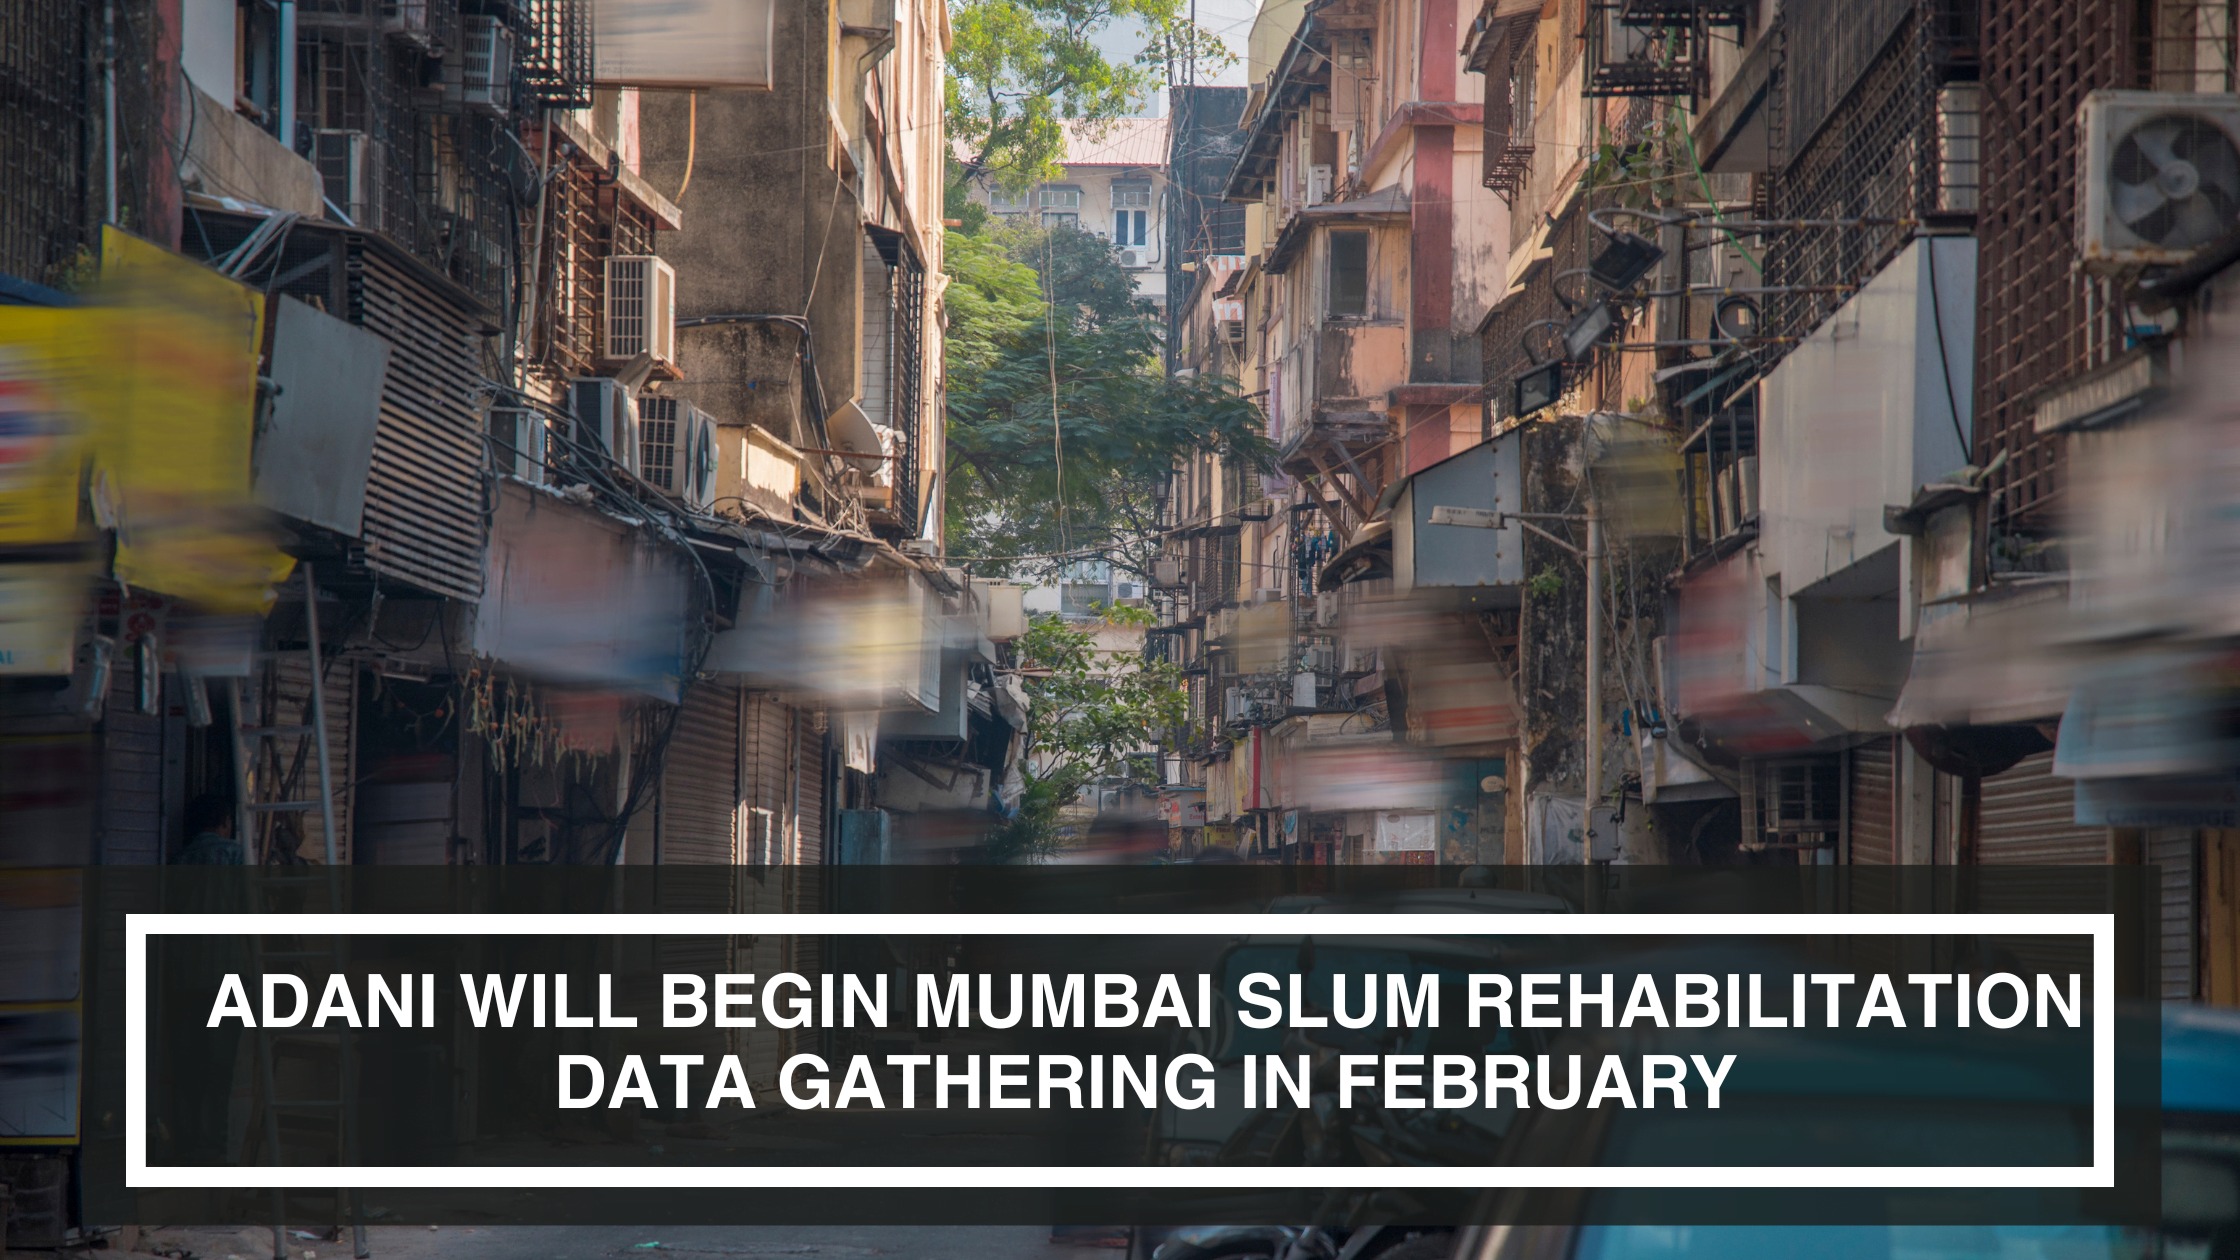 Adani will begin Mumbai slum rehabilitation data gathering in February